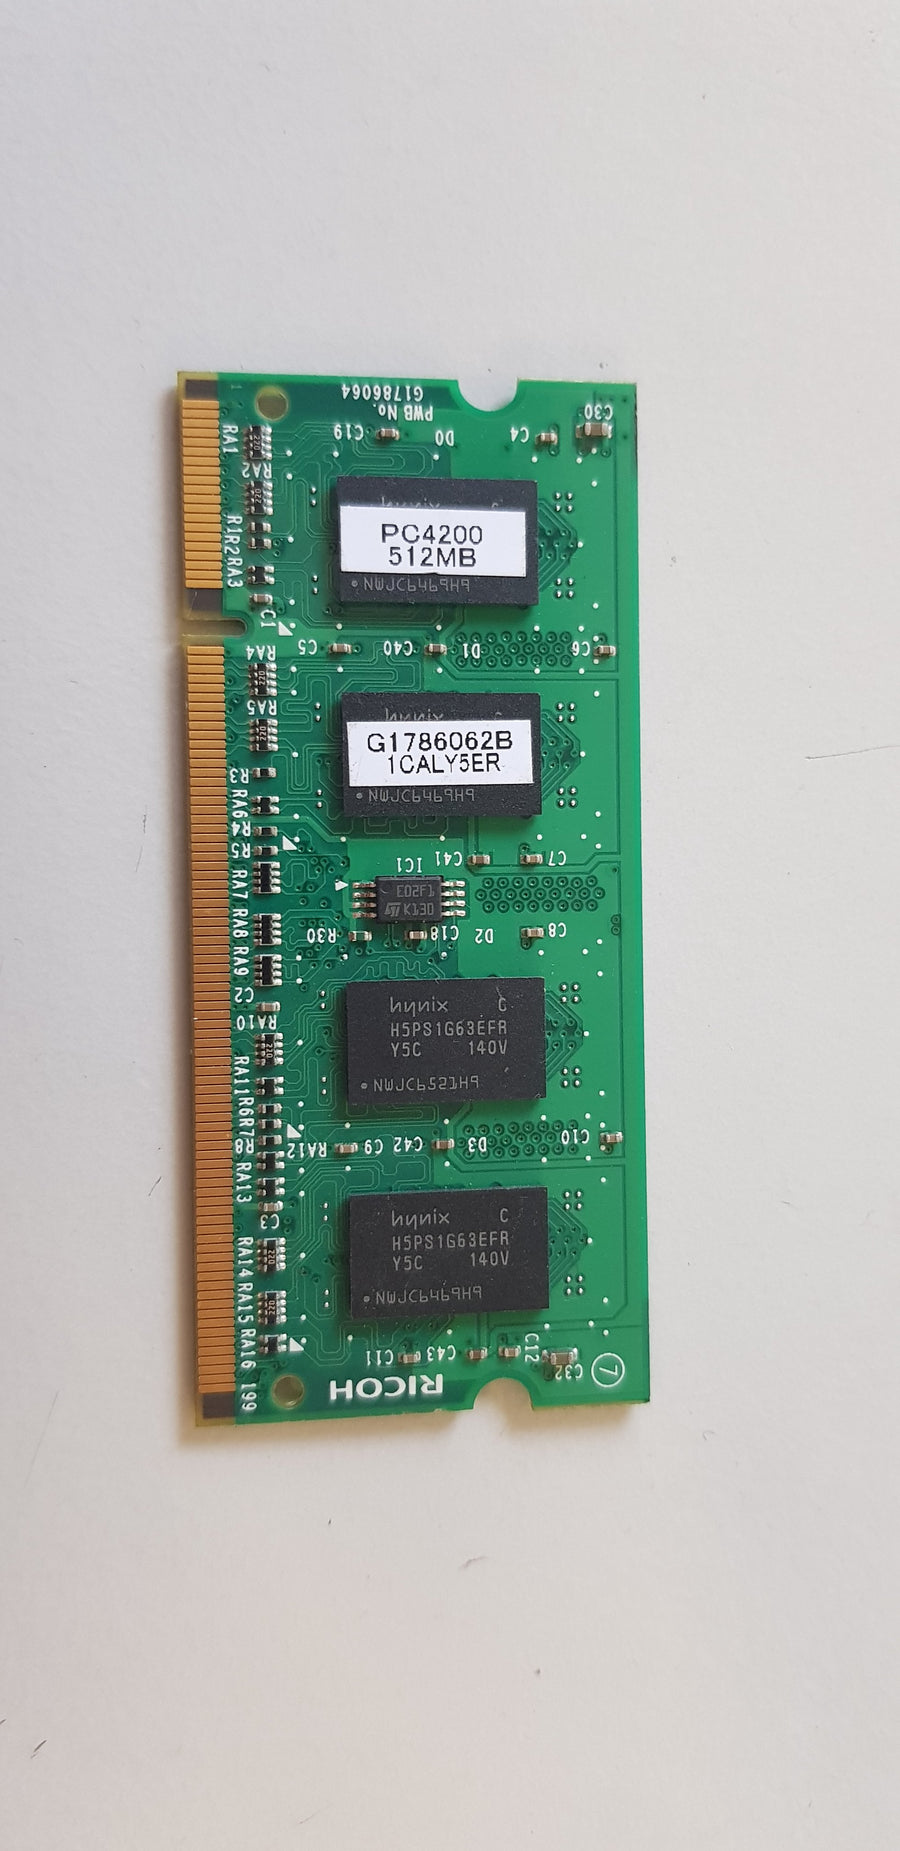 Ricoh 512MB PC4200 RAM RAWCARD Printer Memory (G1786062B)